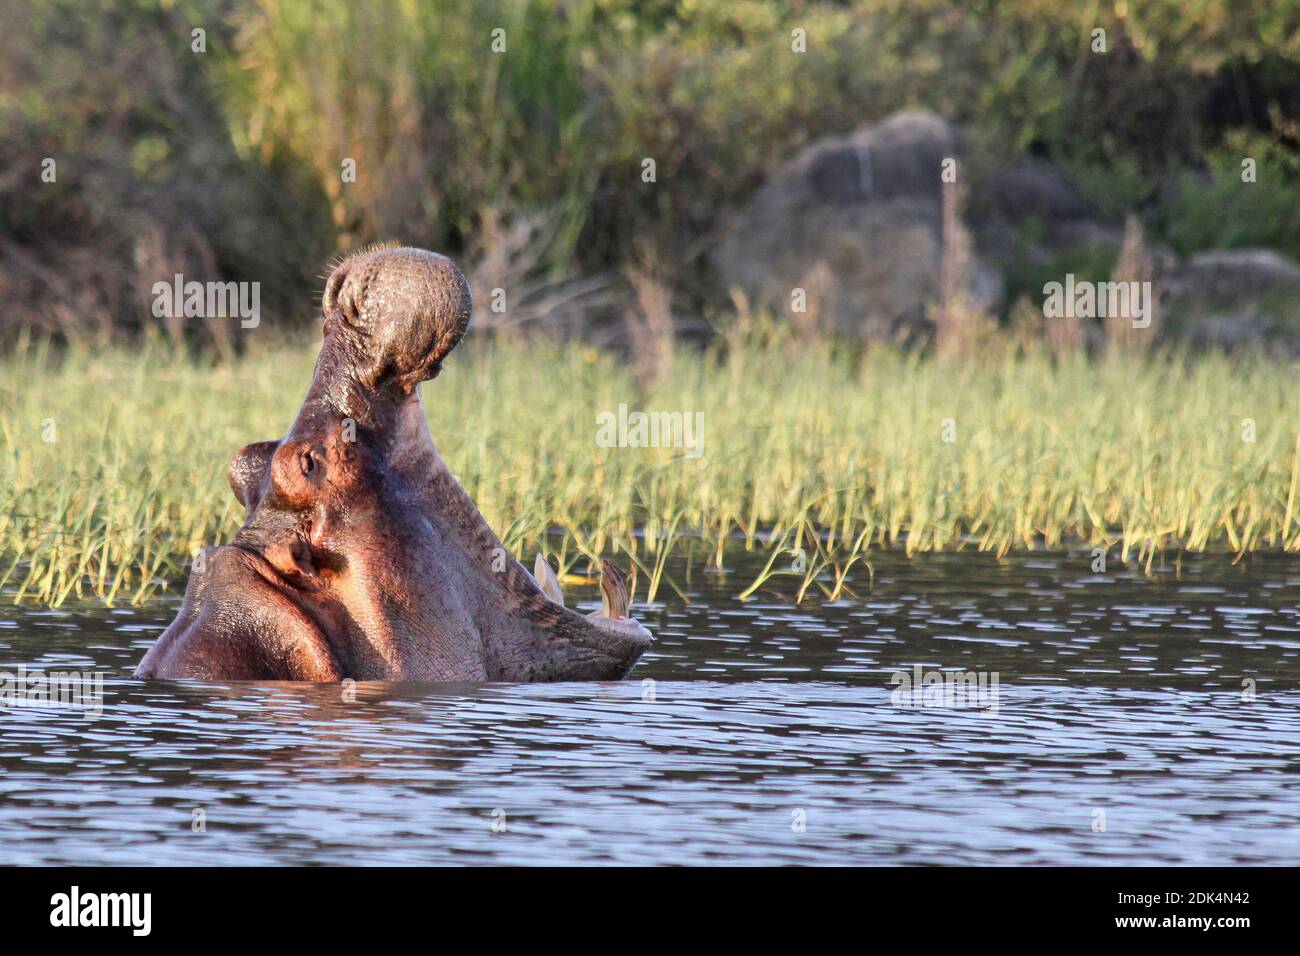 Bostezo de hipopótamo tomado en el Lago Chamo, Etiopía Foto de stock